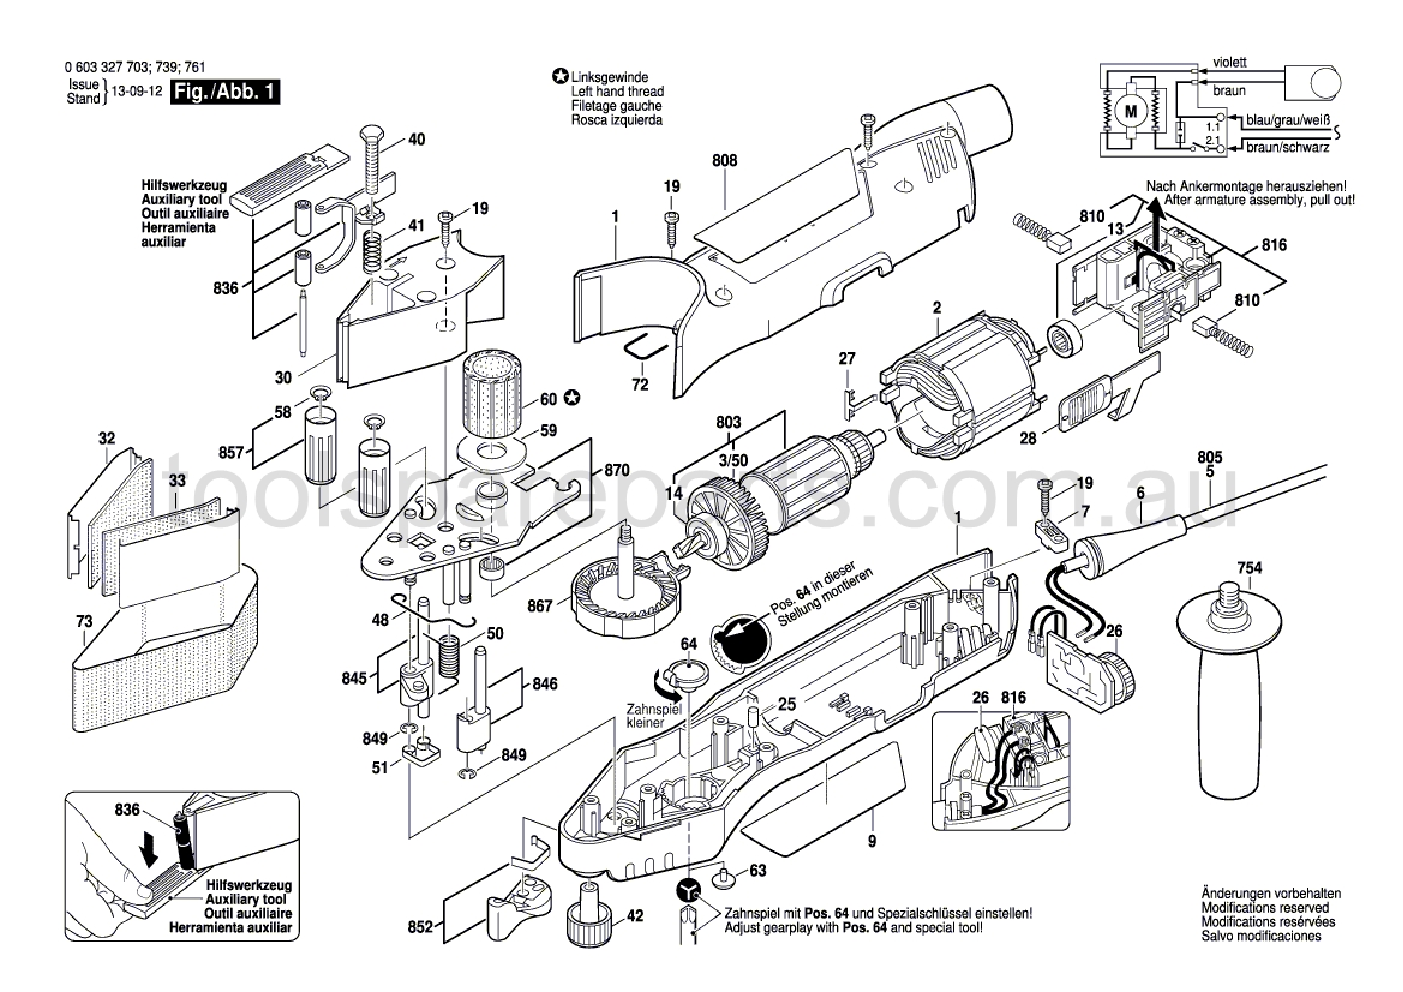 Bosch PVS 300 AE 0603327737  Diagram 1